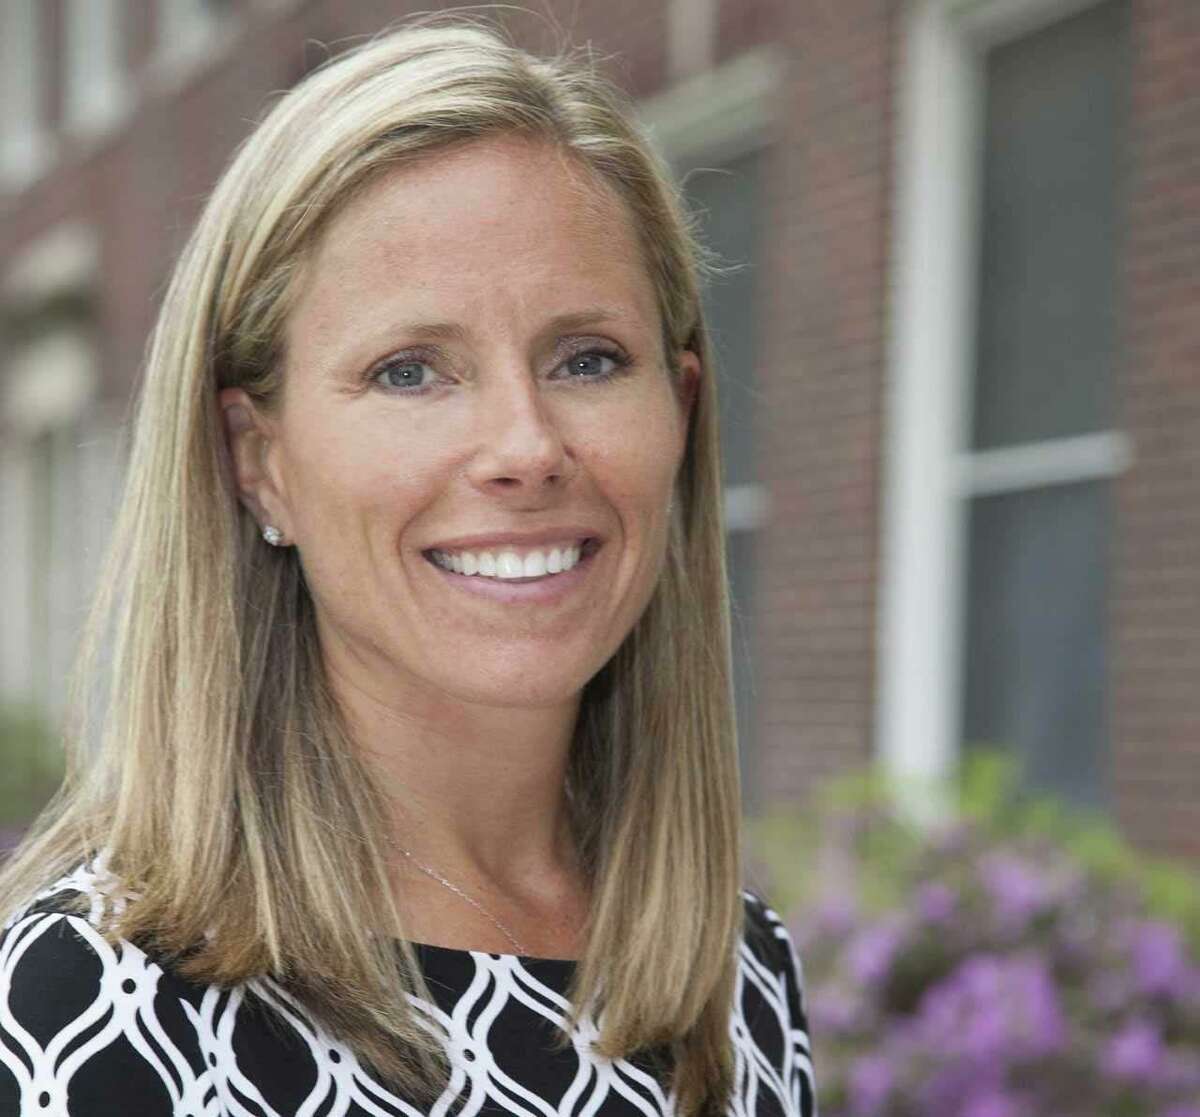 Crystal Kitselman, a third-grade teacher from North Mianus School, has been chosen as a semifinalist for Connecticut’s Teacher of the Year 2020 Award.